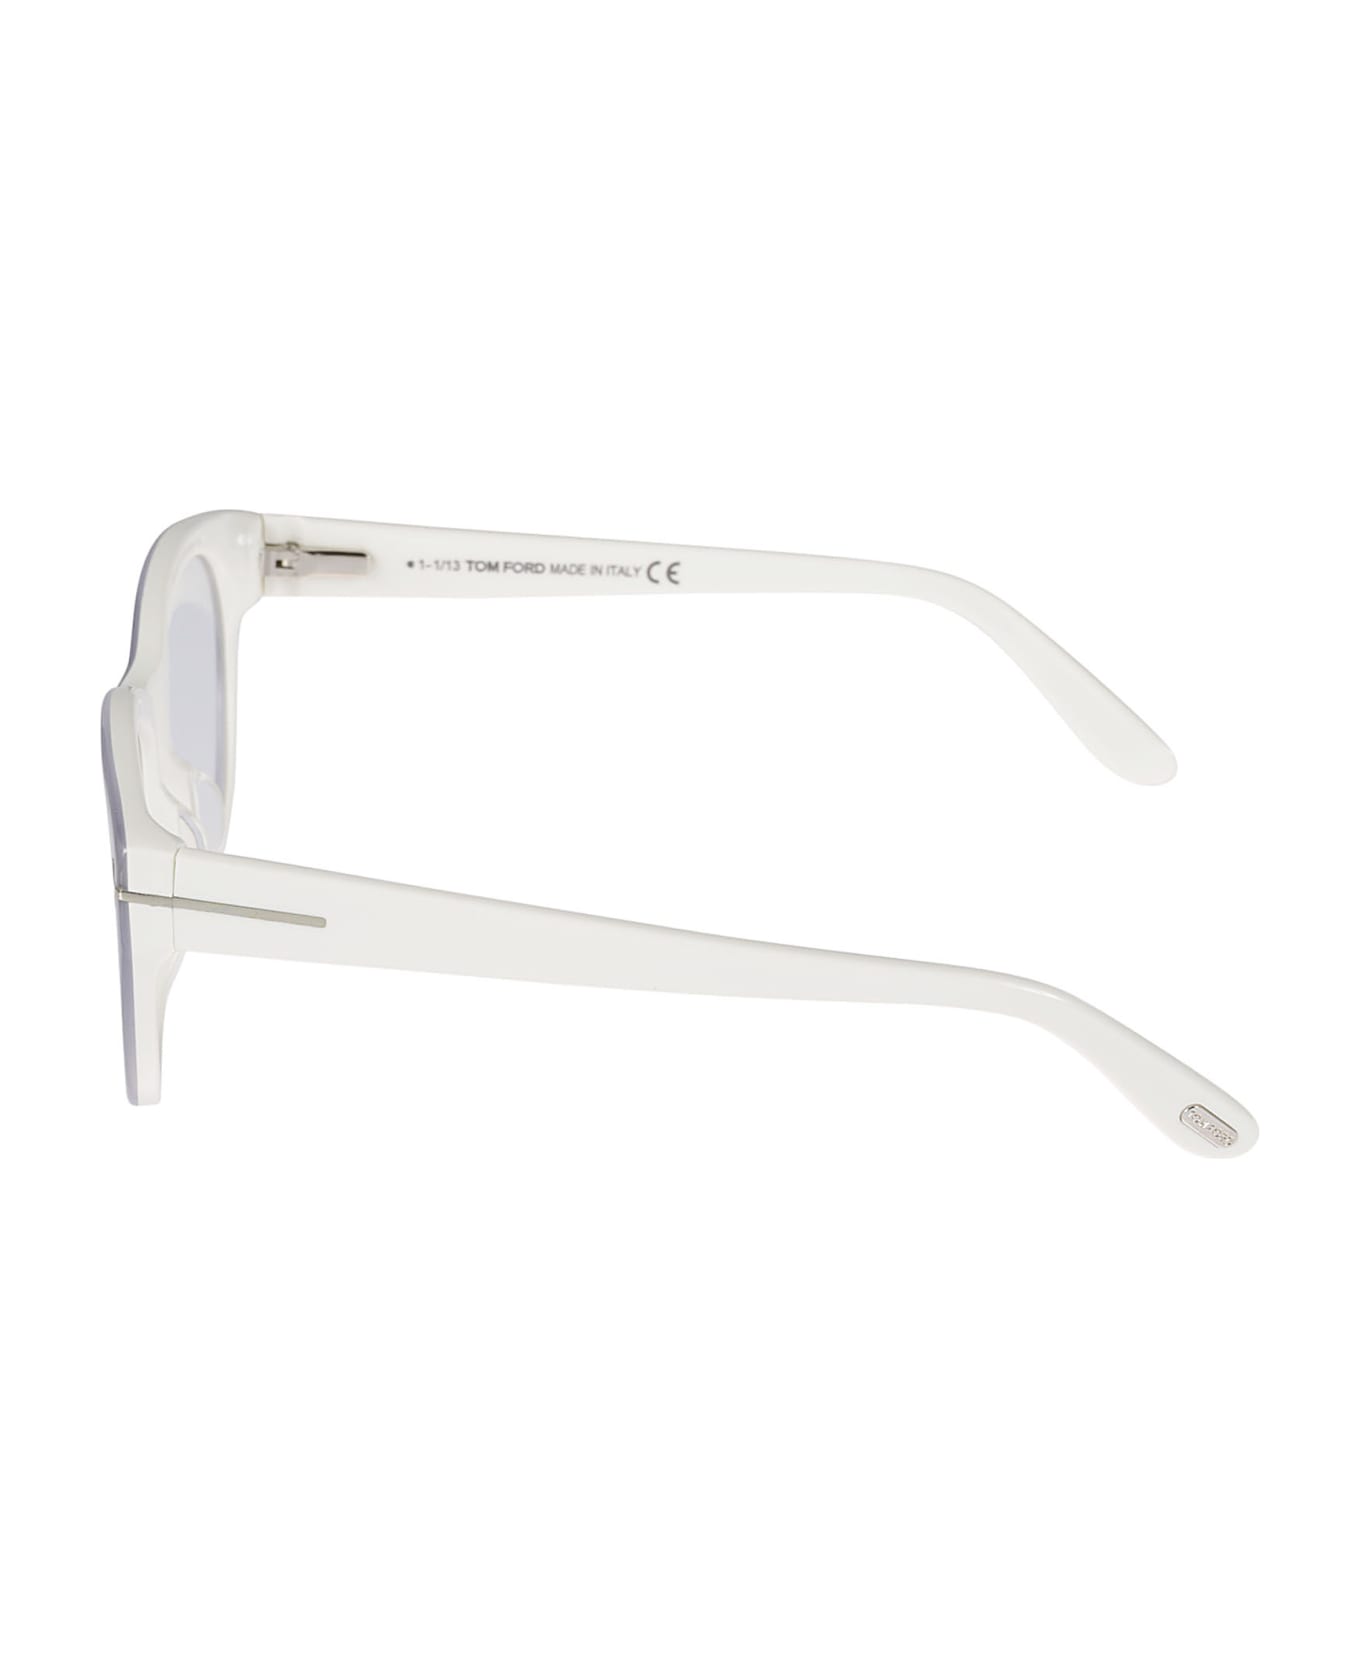 Tom Ford Eyewear T-plaque Clear Glasses - N/A